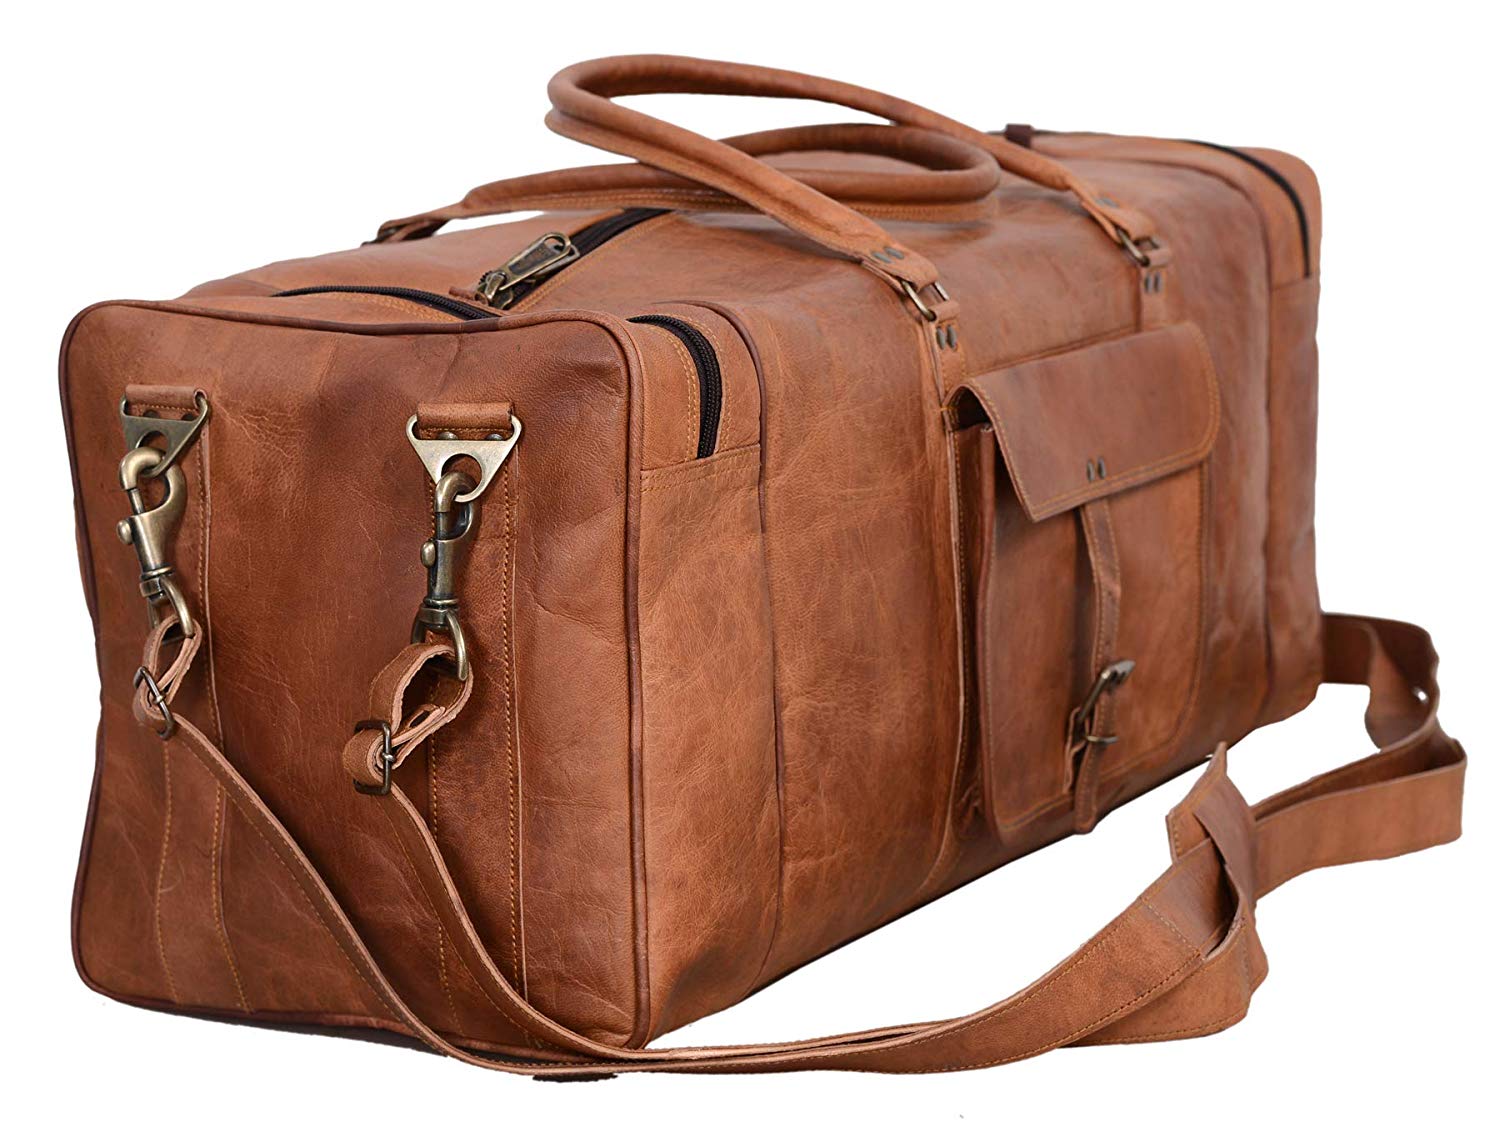 Patek Philippe Large Office/Travel Messenger Duffle Bag in Solid Brown